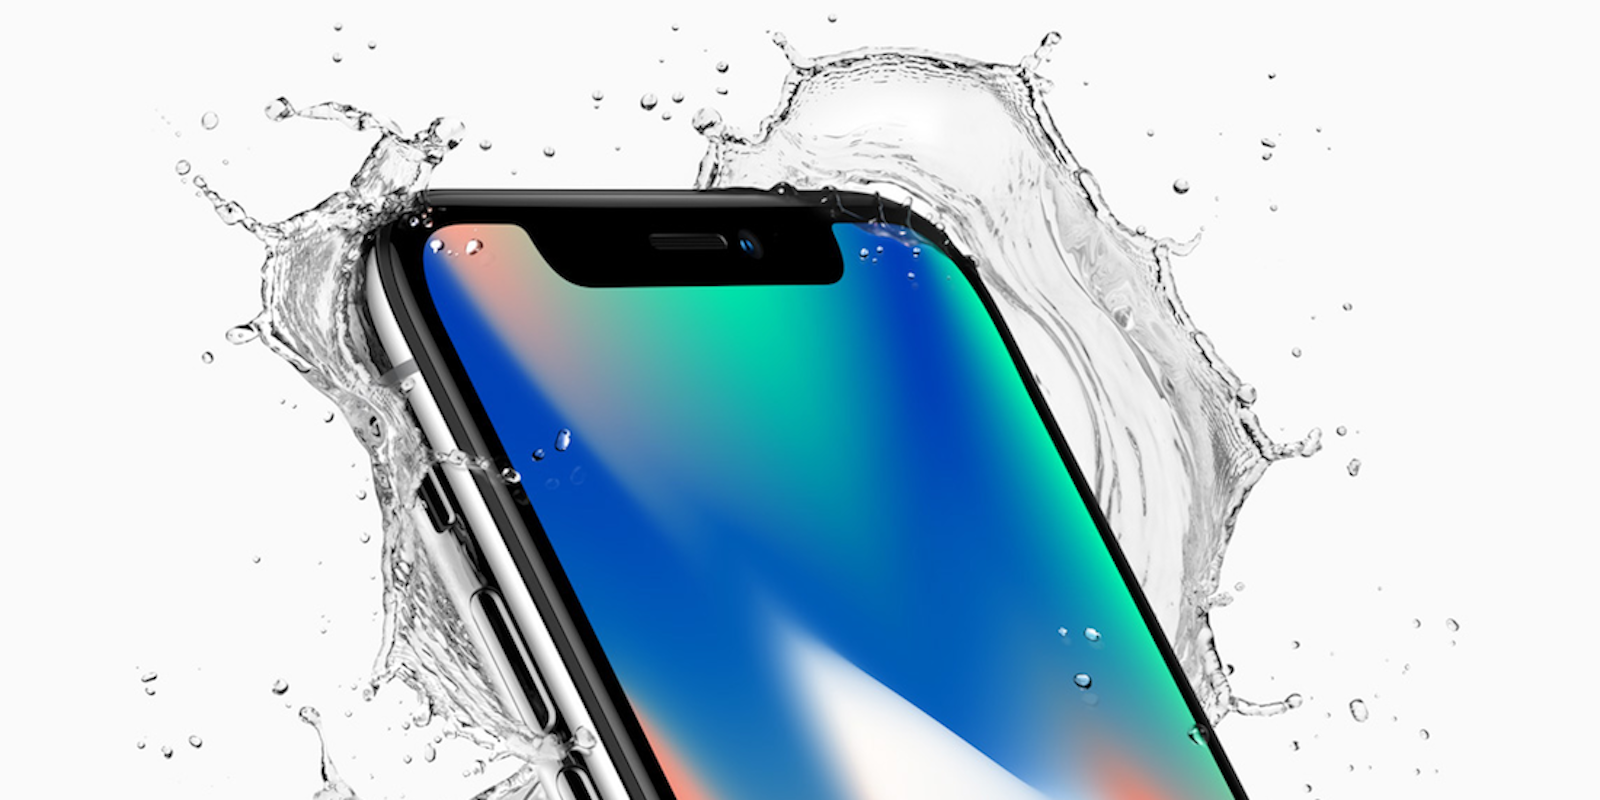 Apple iPhone X with water splash